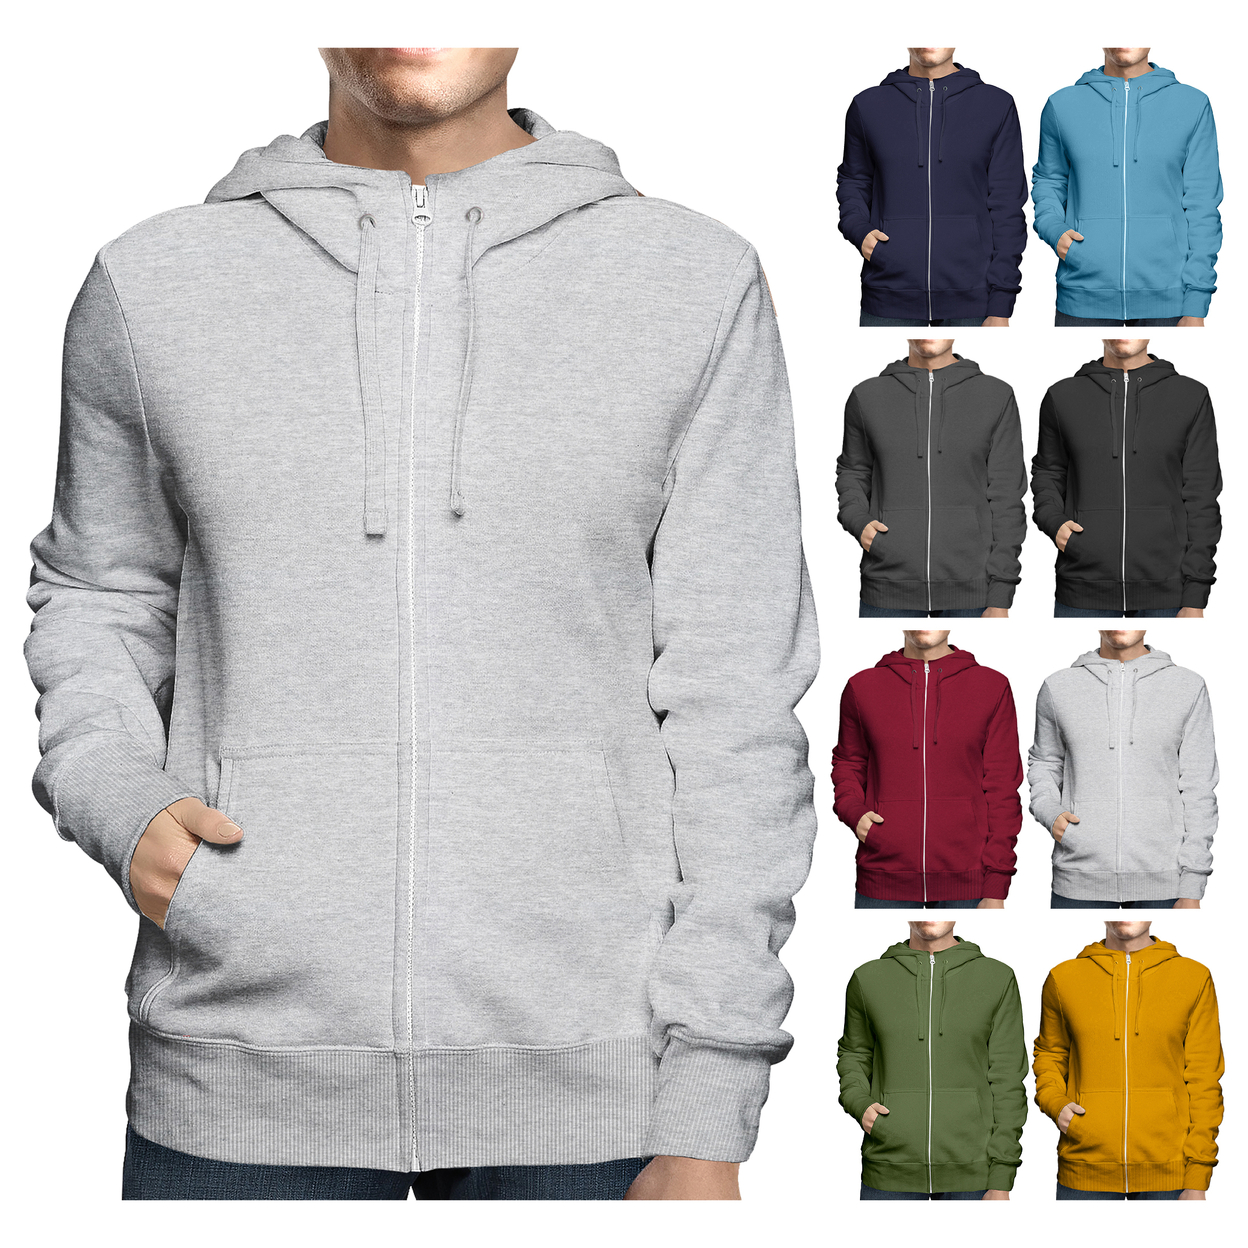 2-Pack: Men's Winter Warm Soft Full Zip-Up Fleece Lined Hoodie Sweatshirt - Black & Grey, Large